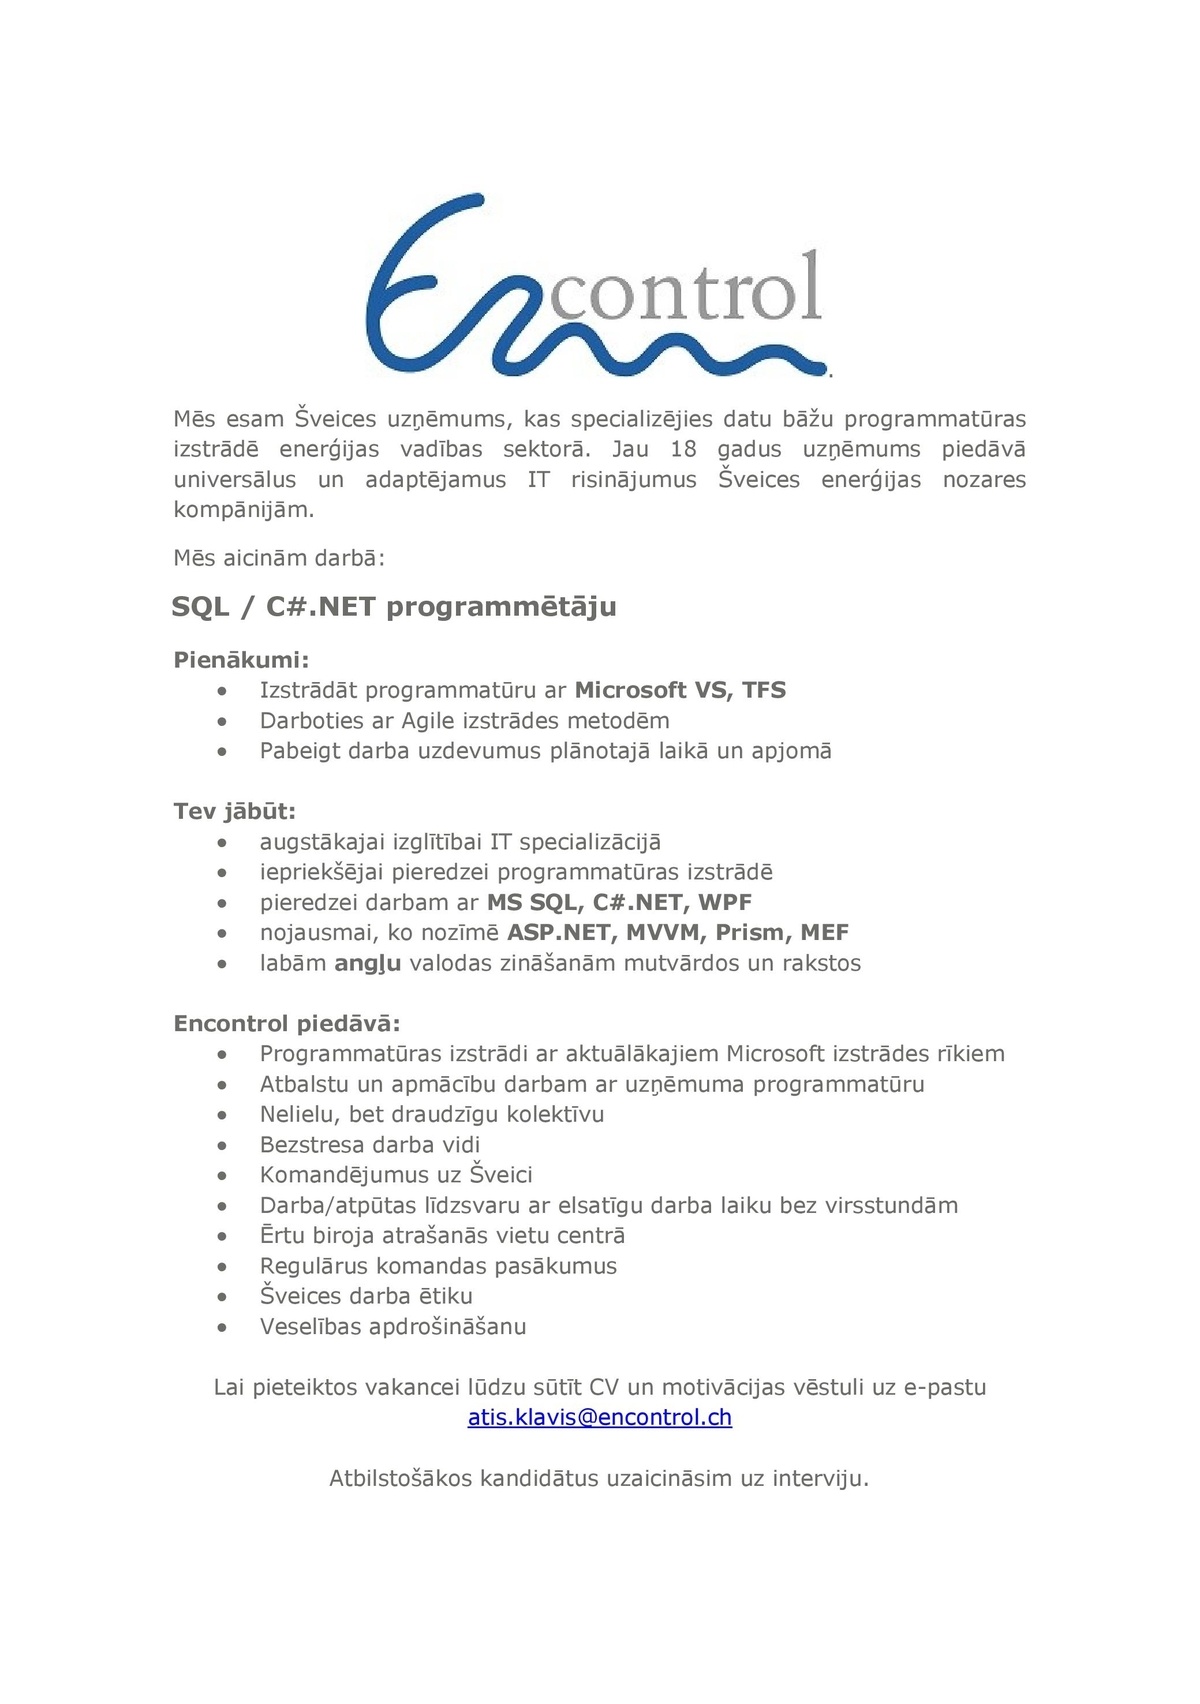 Encontrol Baltic, SIA SQL / C#.NET programmētājs/-a